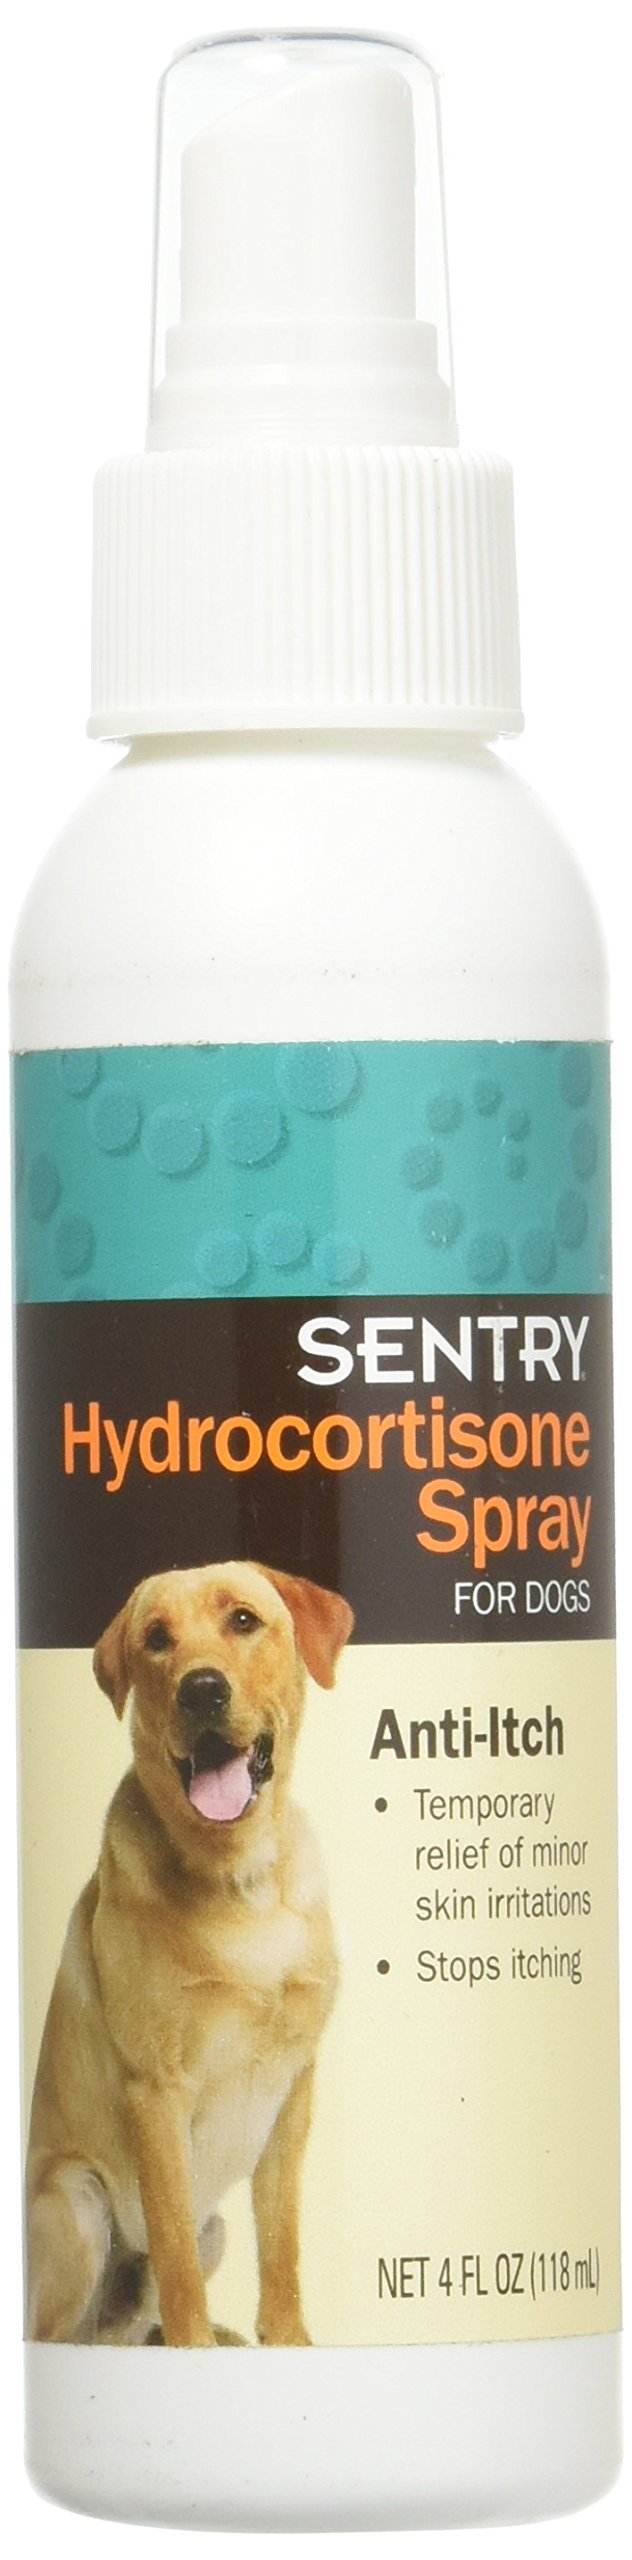 [Australia] - SENTRY Hydrocortisone Spray for Dogs, 4 oz 